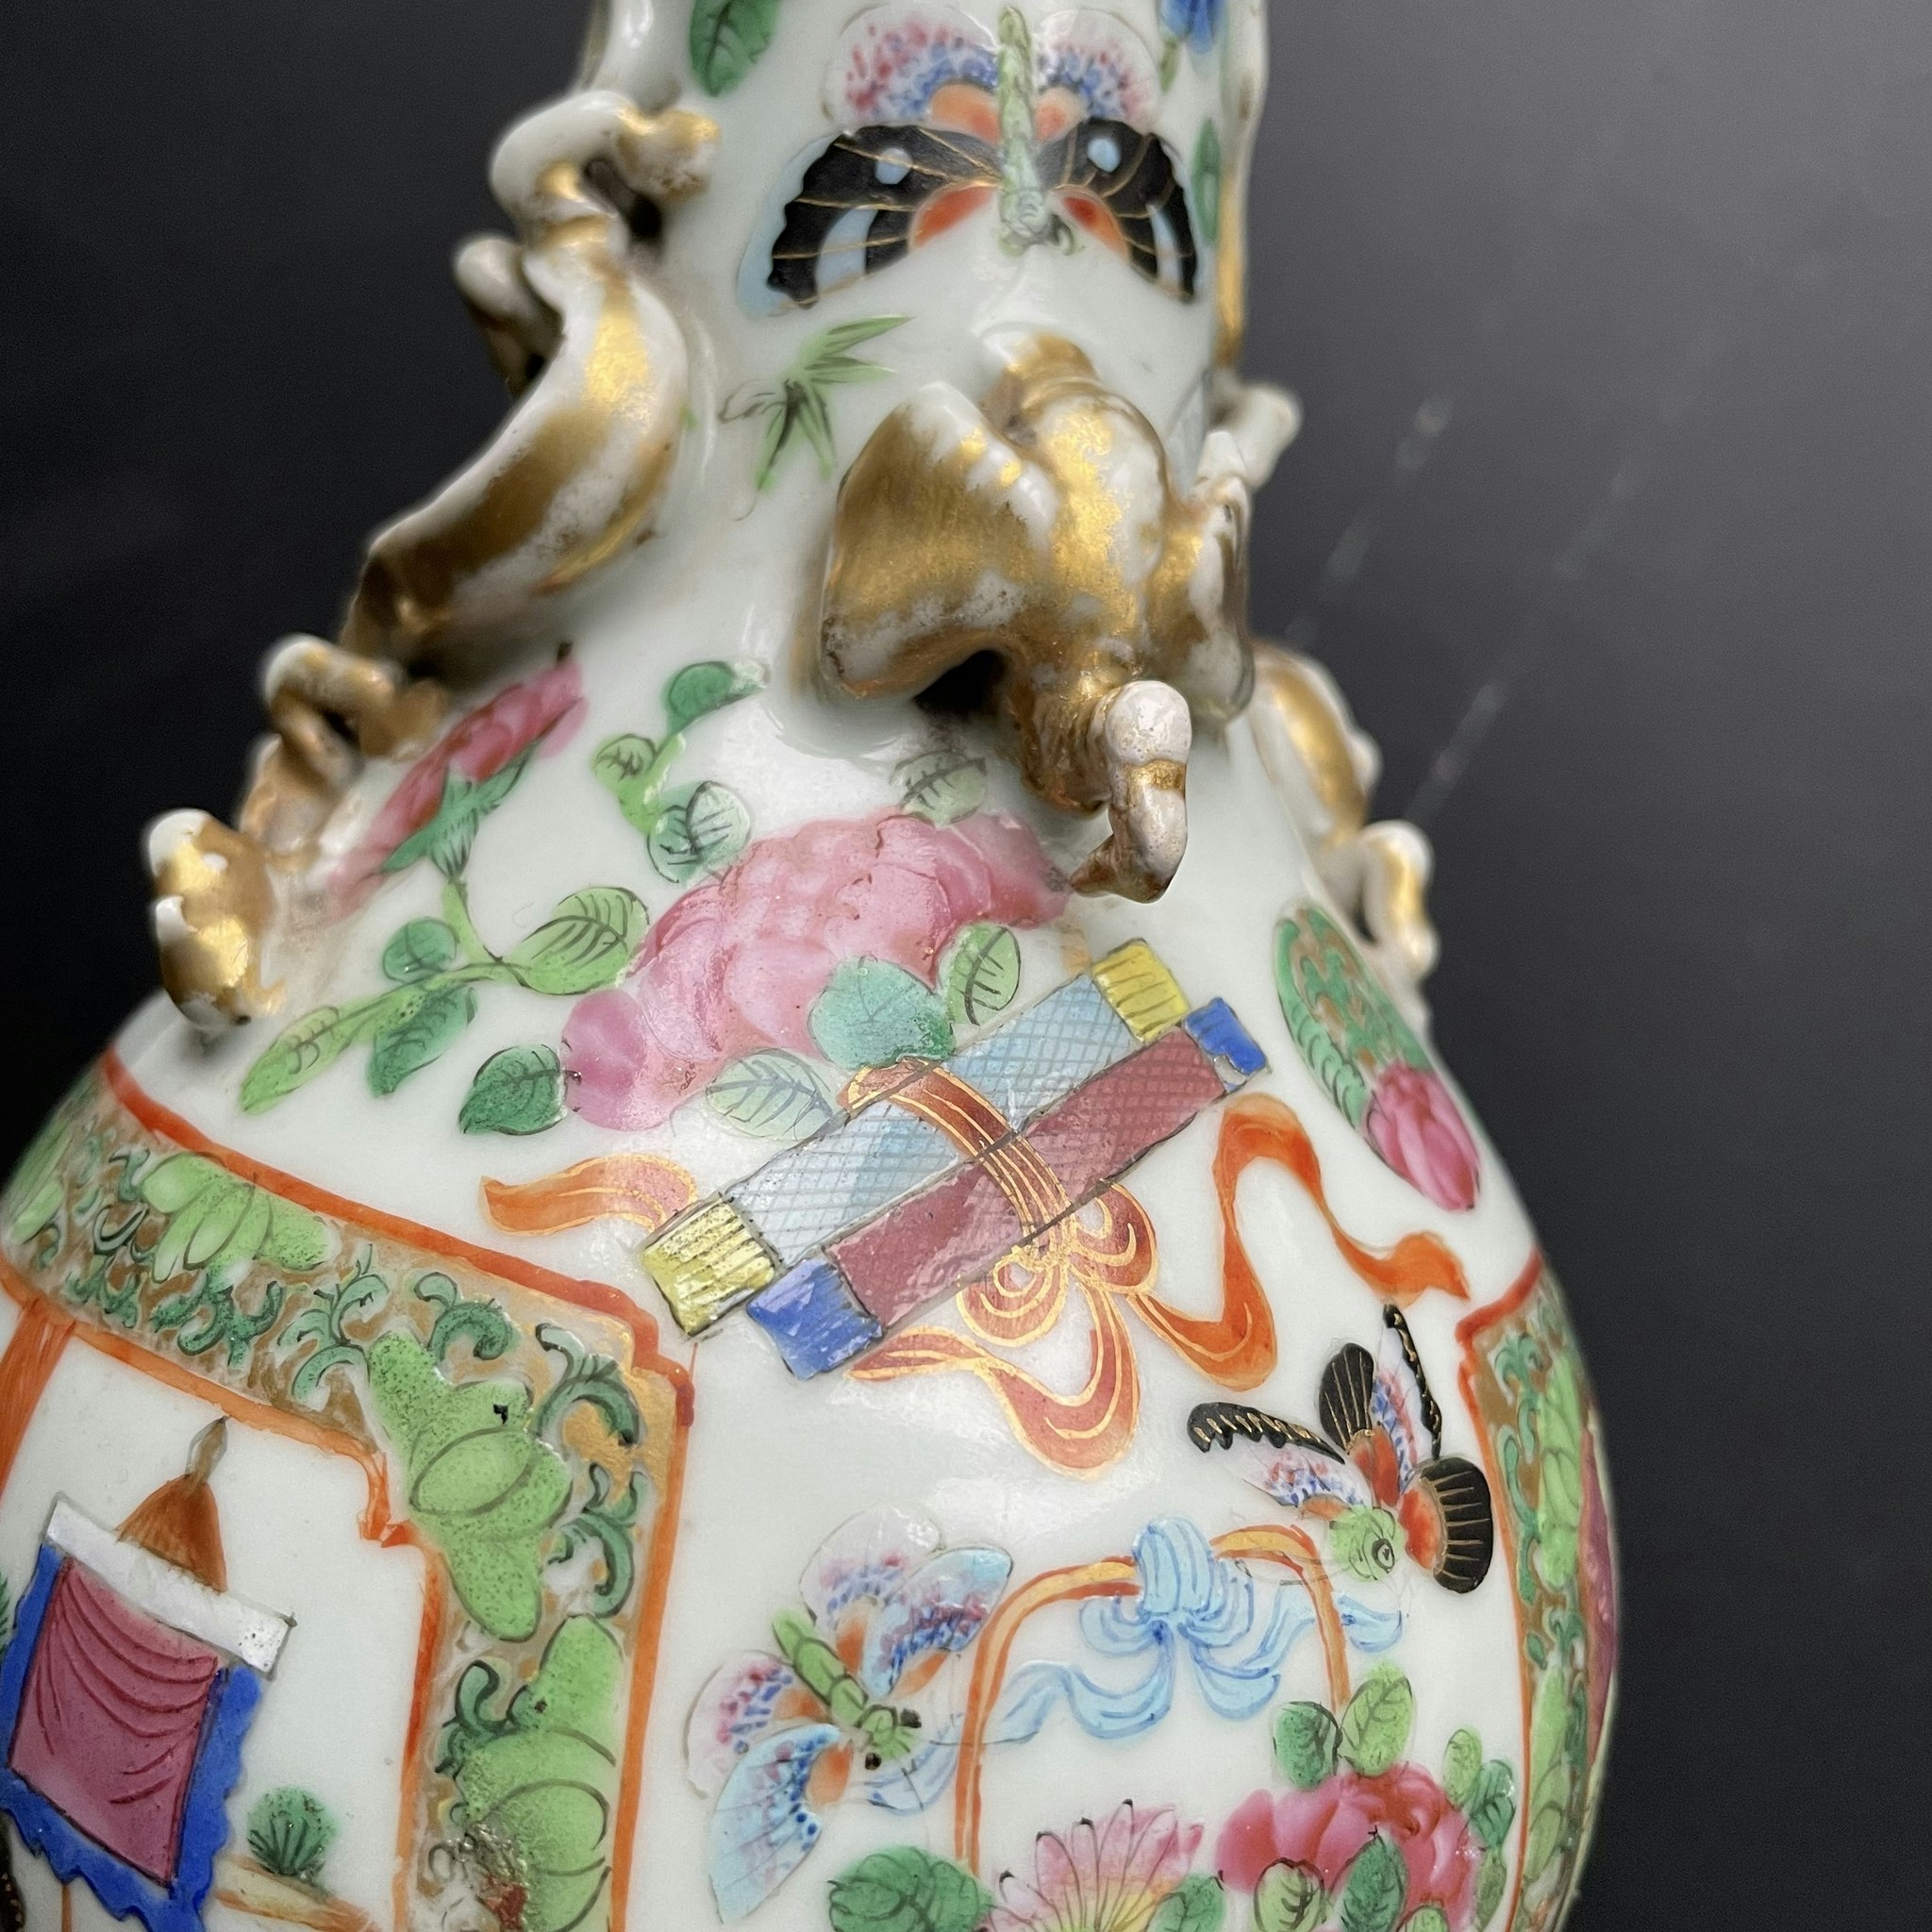 Antique Chinese rose mandarin vase Lamp 19th century #1299